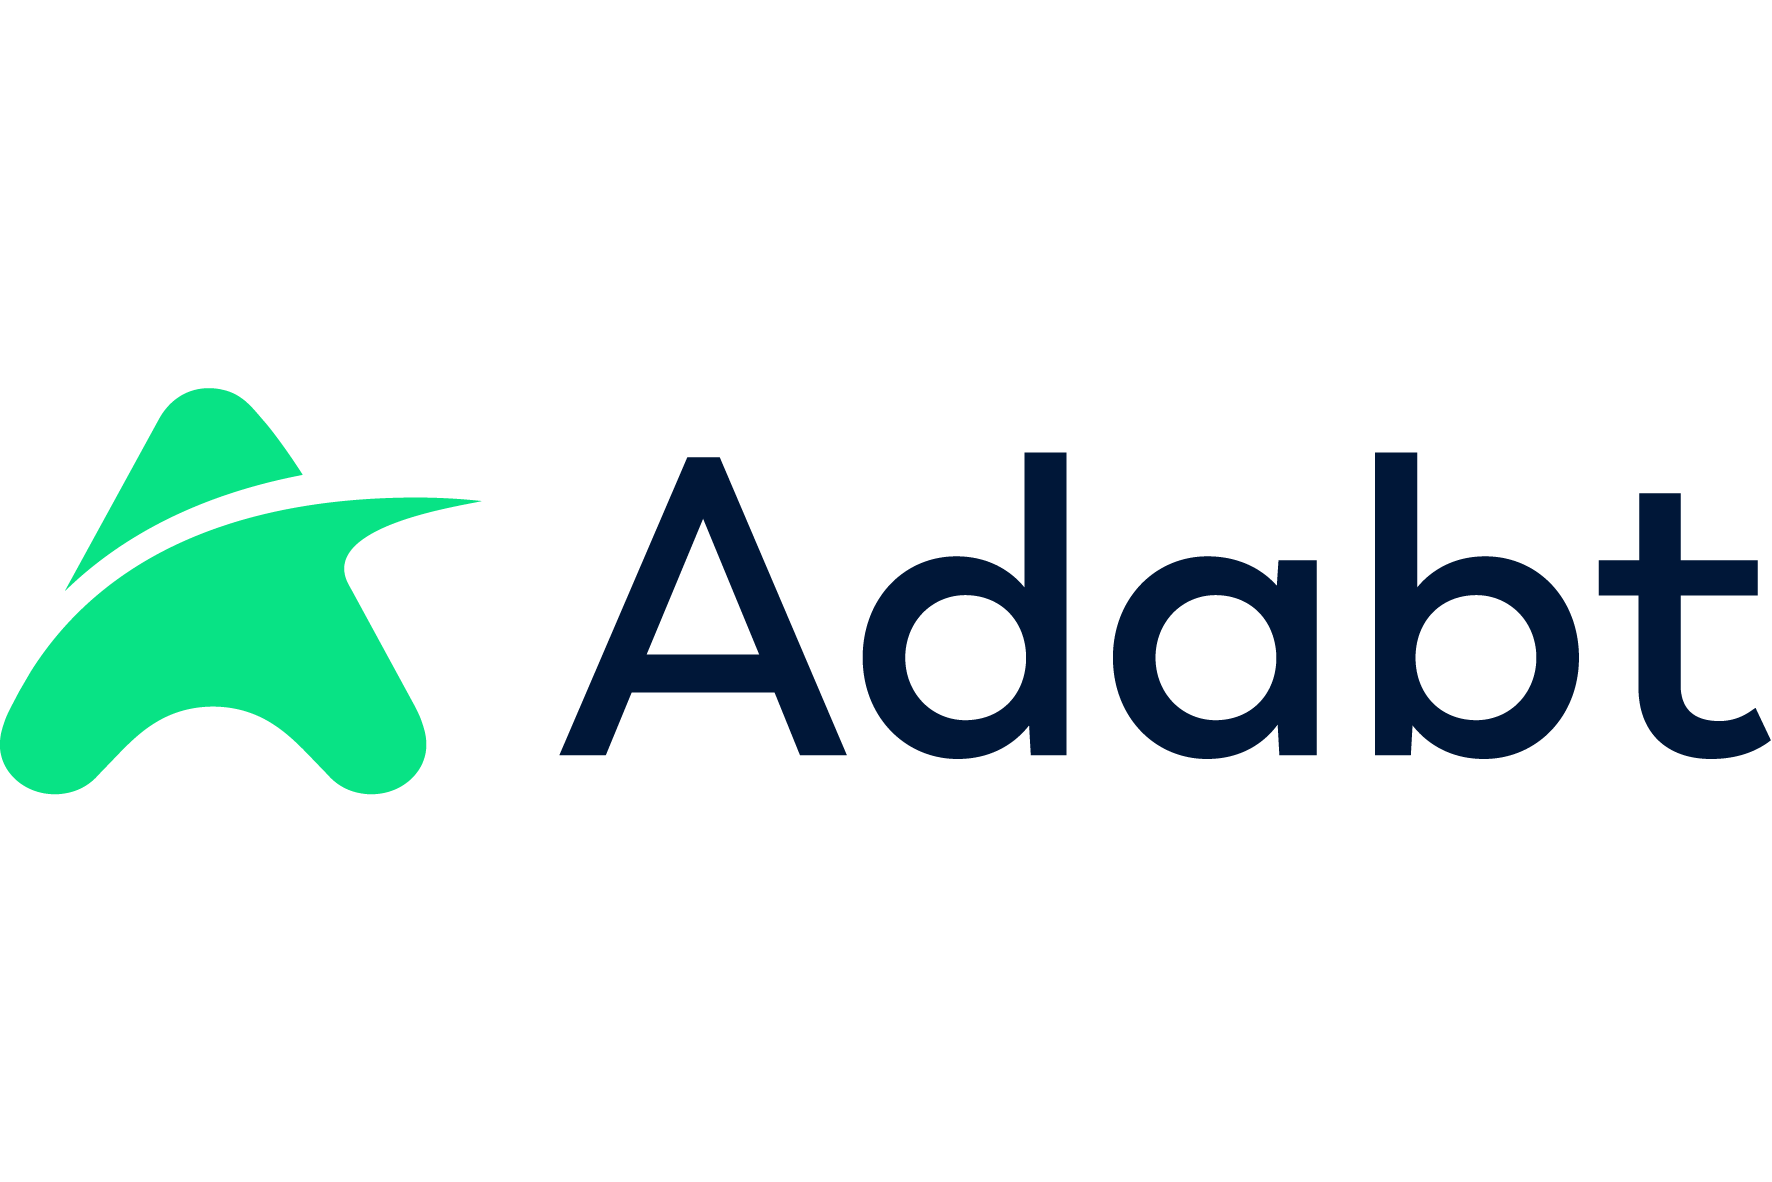 Adabt logo full color rgb 01